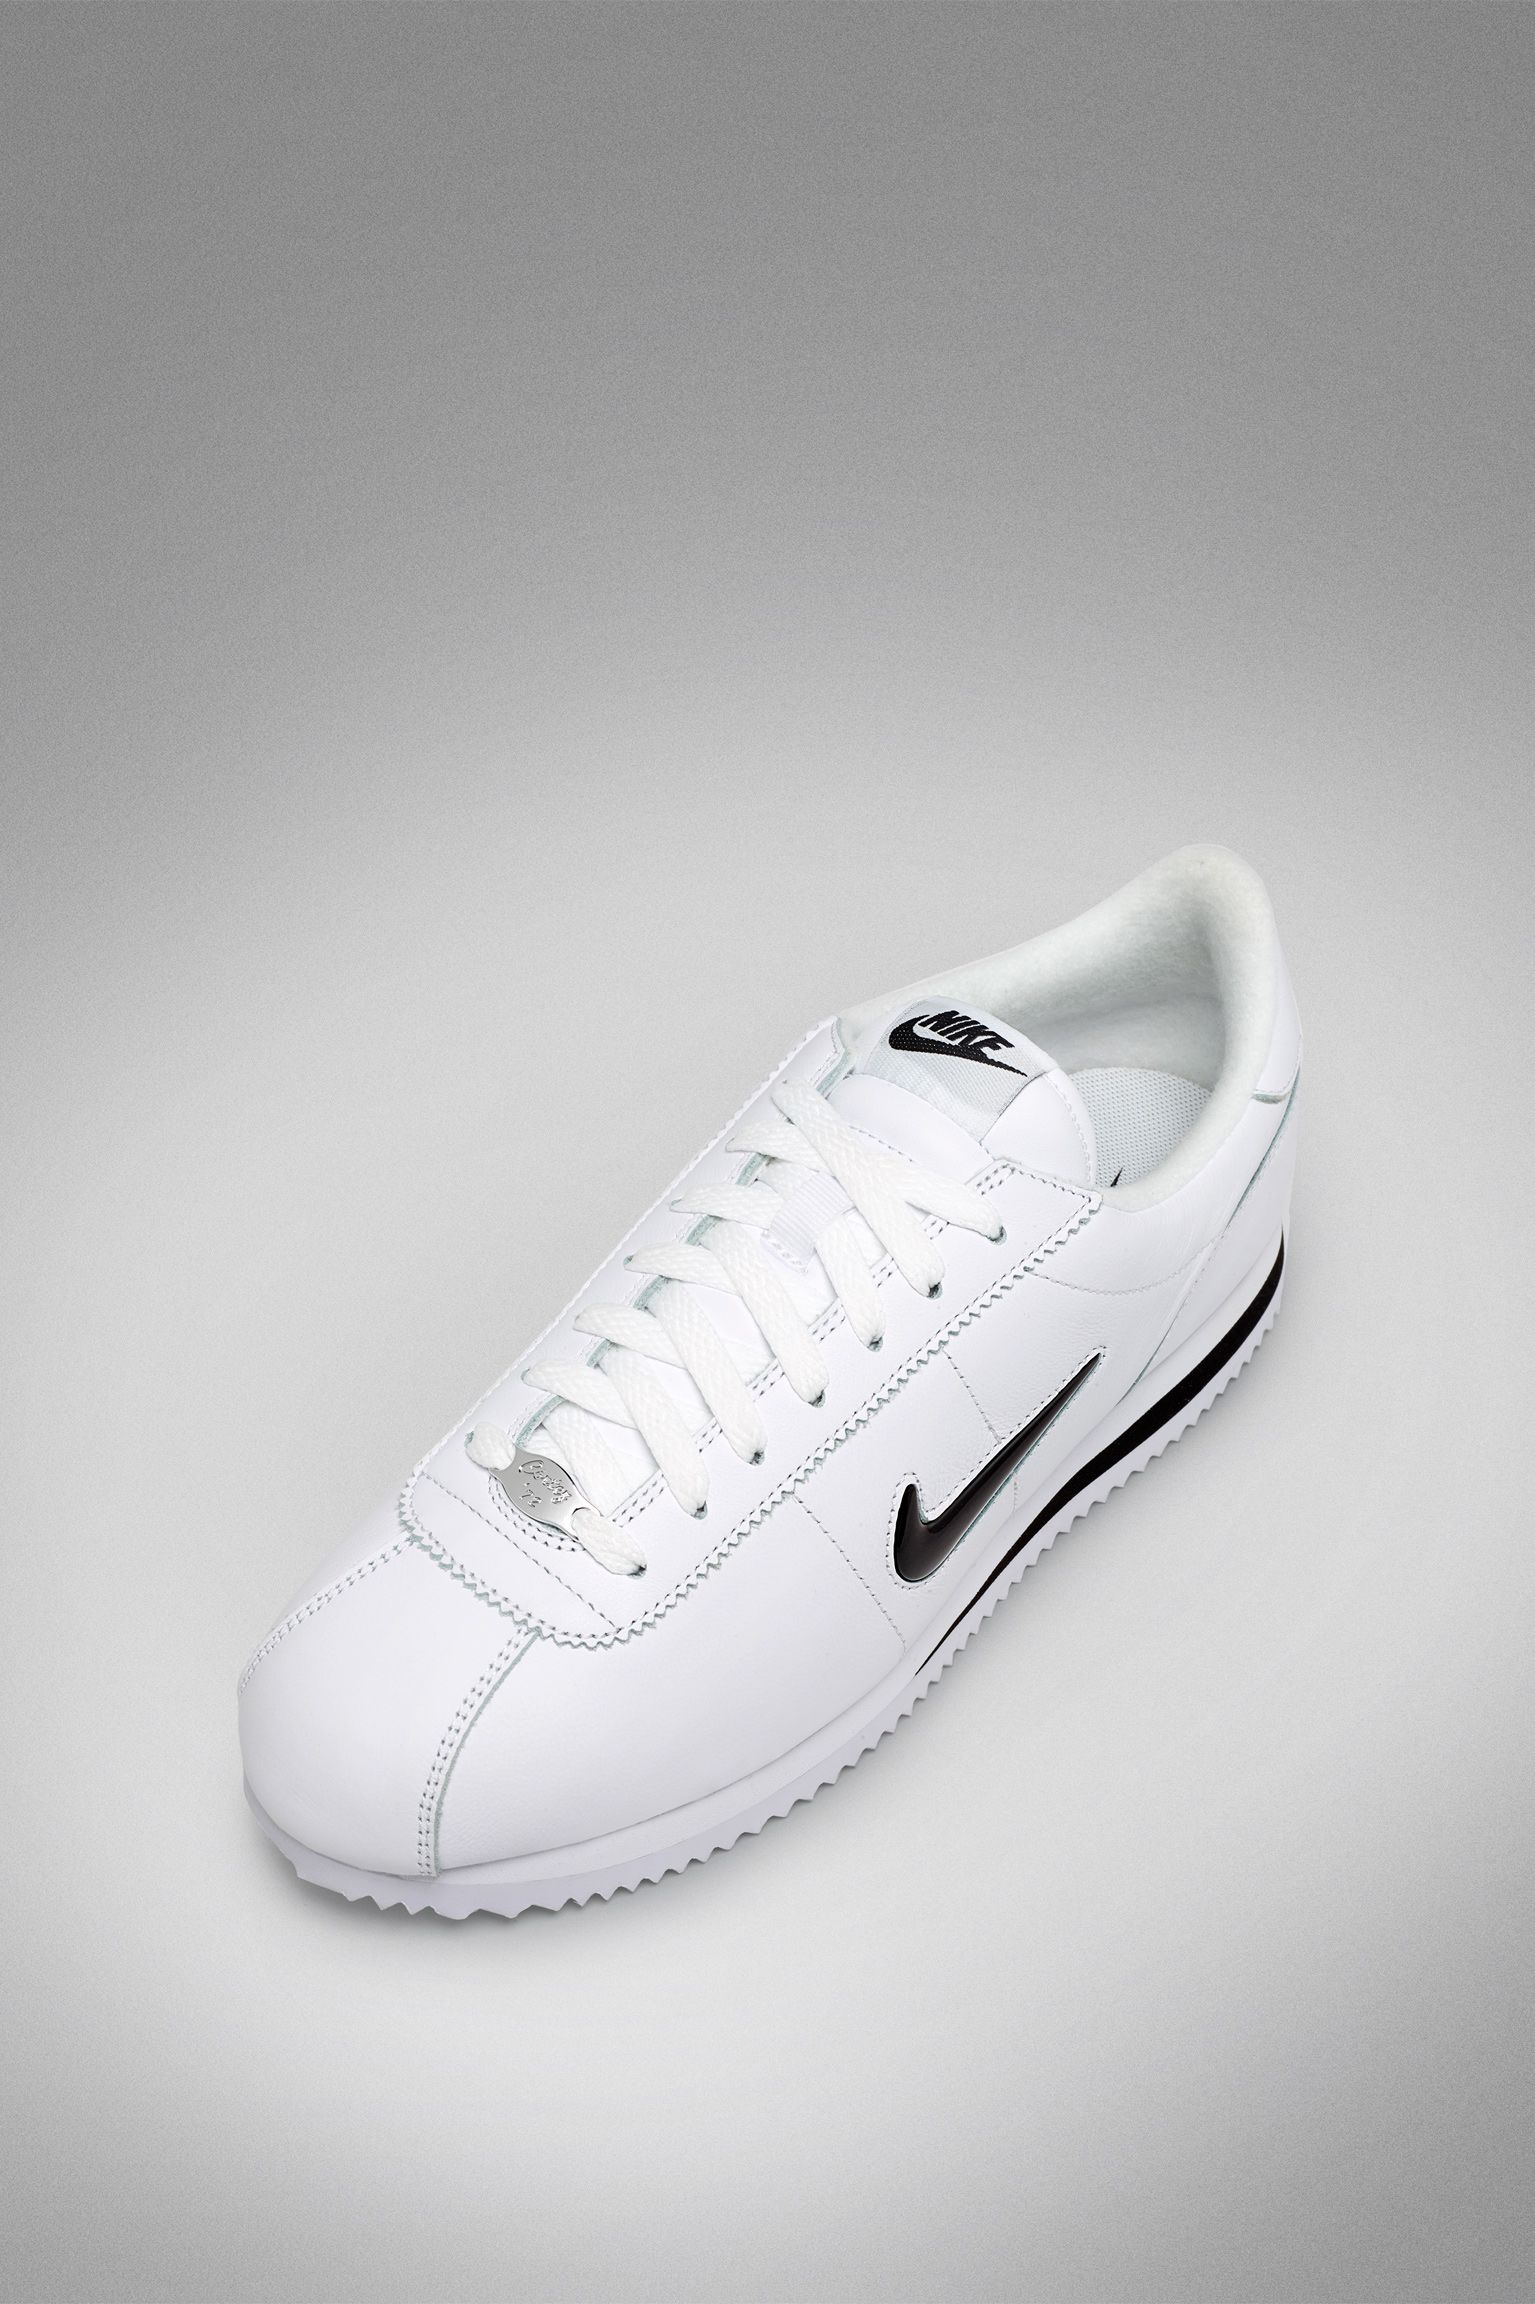 Fecha de lanzamiento de Nike Cortez Jewel "White & Nike SNKRS ES